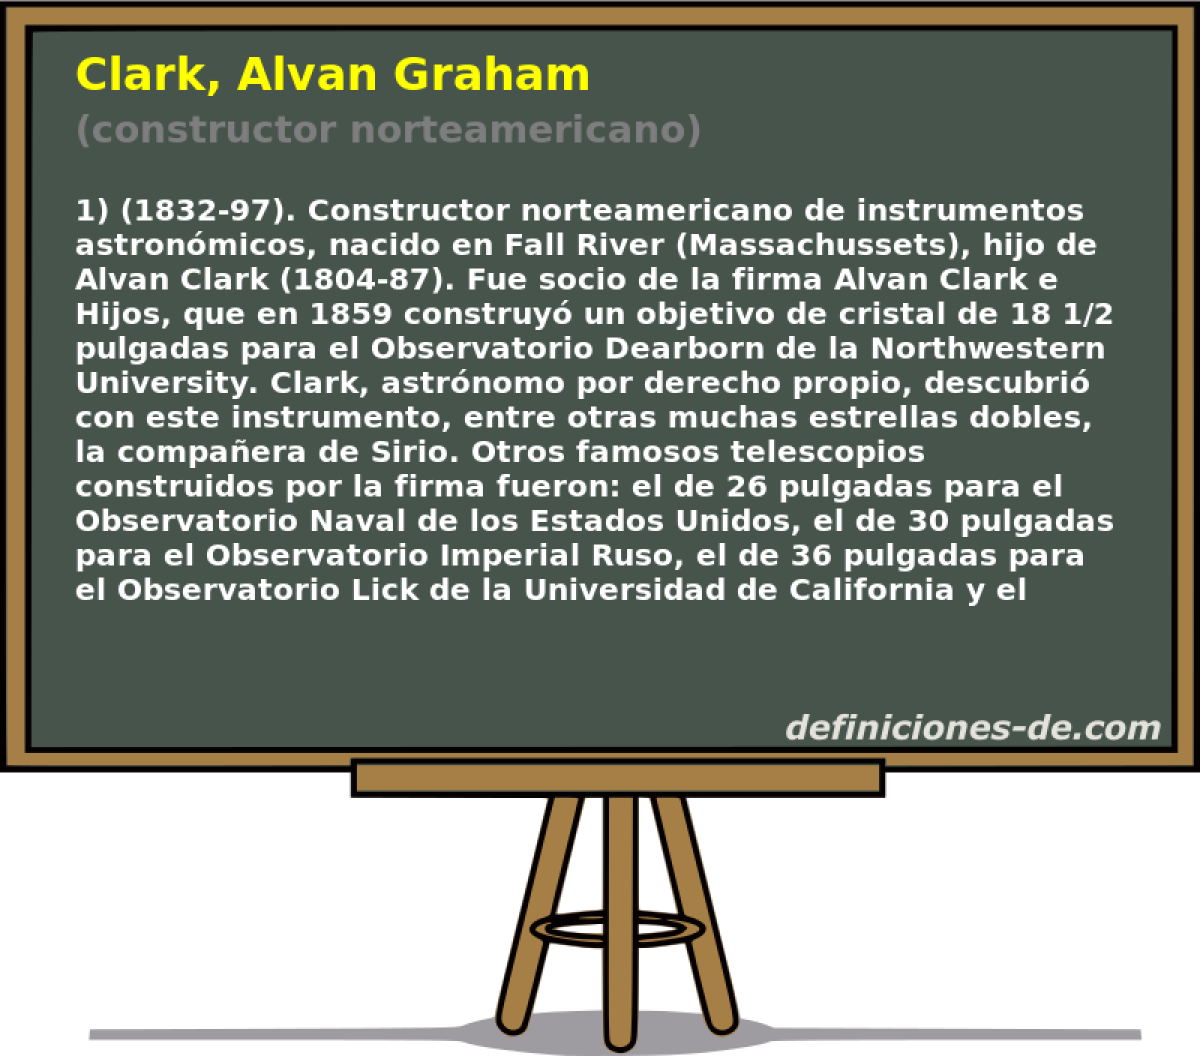 Clark, Alvan Graham (constructor norteamericano)